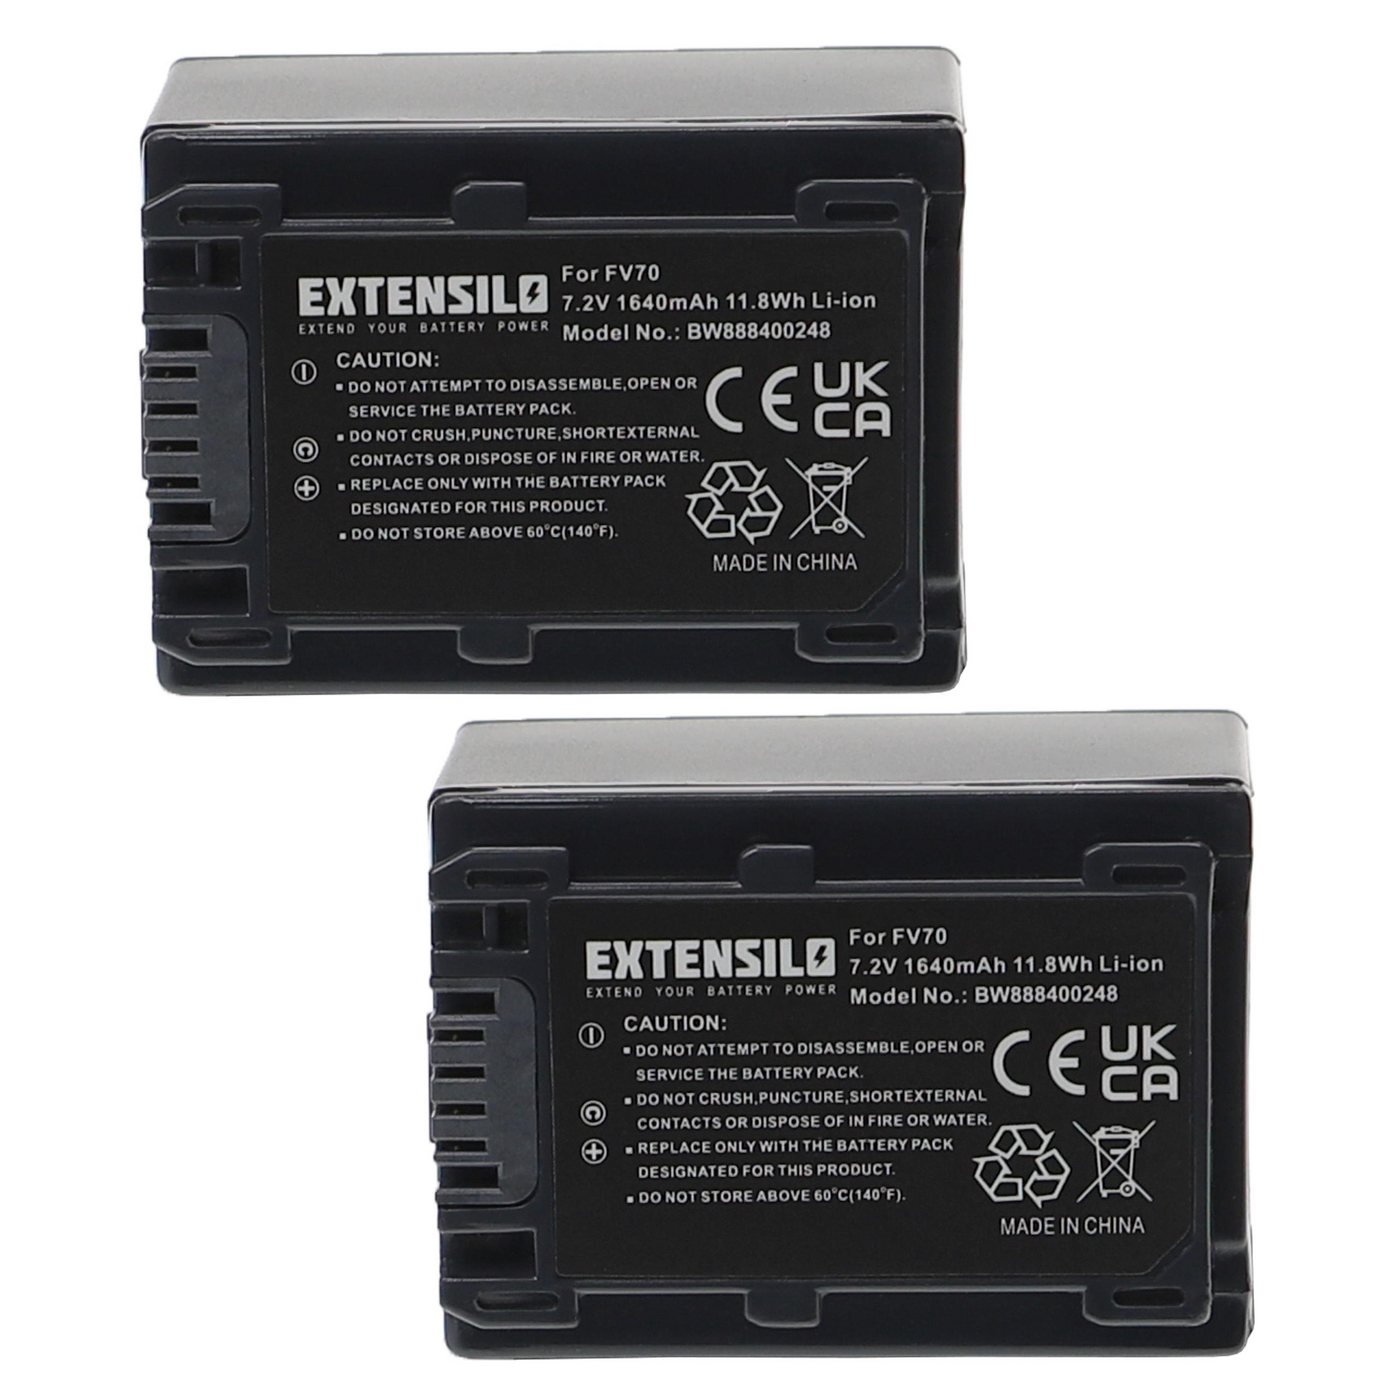 Extensilo passend für Sony HDR-CX110B, HDR-CX110L, HDR-CX110R, HDR-CX115VE, HDR-CX110E, HDR-CX115E Kamera / Foto DSLR / Camcorder Analog / Camcorder Digital (1640mAh, 7,2V, Li-Ion) Kamera-Akku 1640 mAh von Extensilo